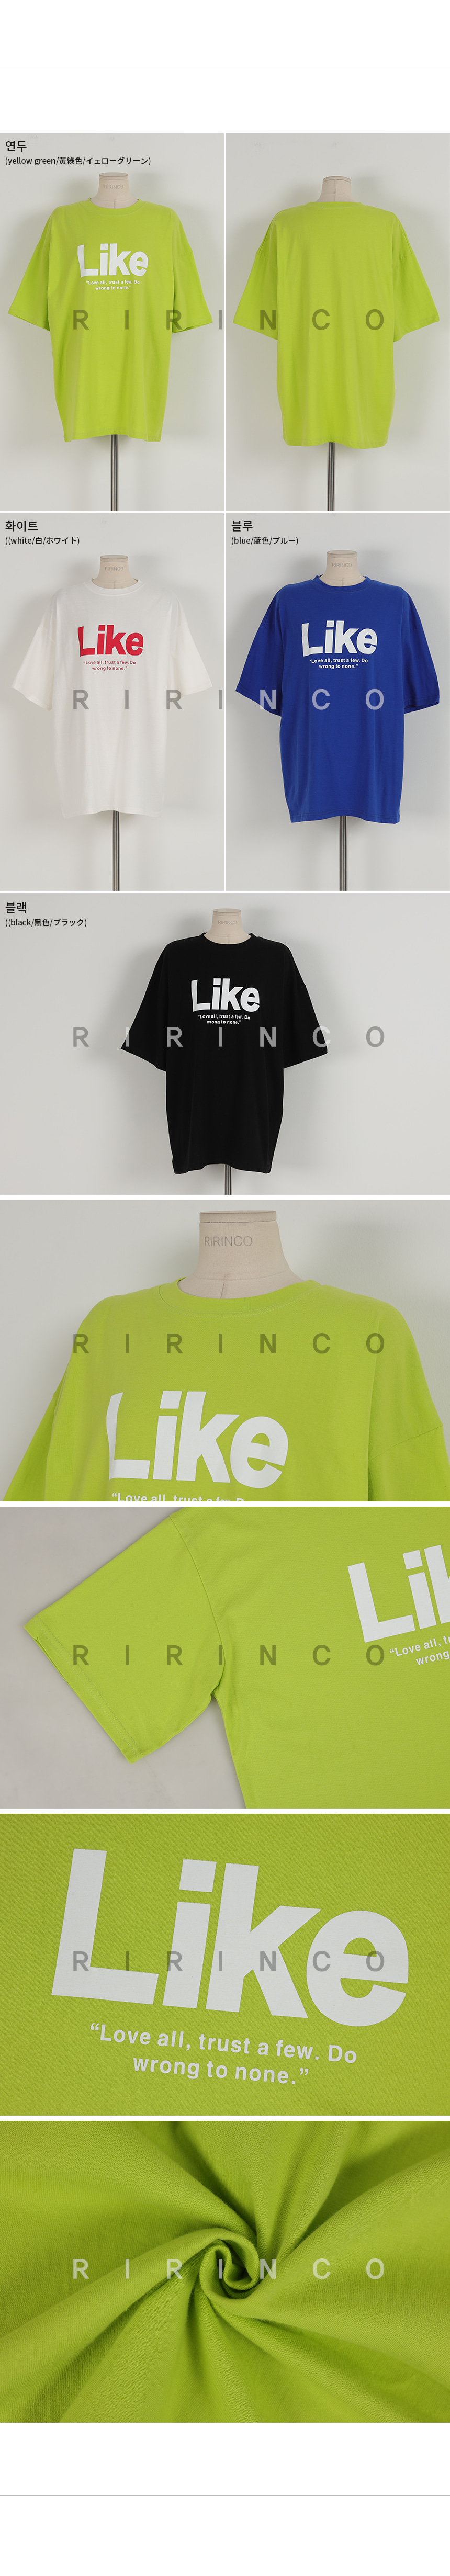 RIRINCO Like オーバーフィット半袖Tシャツ